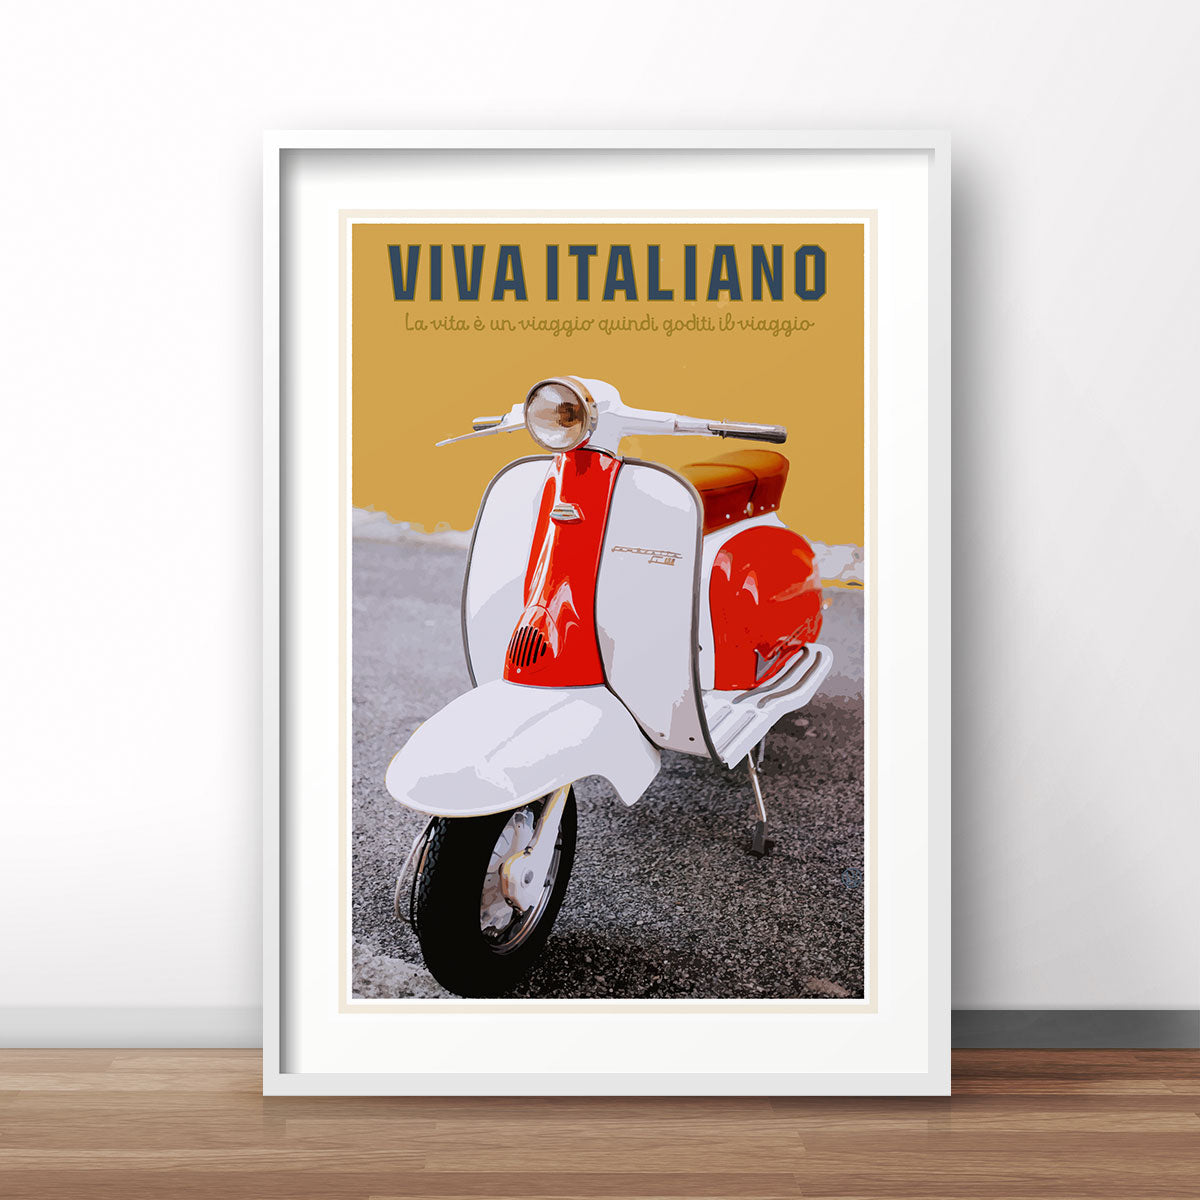 Viva Italia Lambretta retro vintage poster print by Places We Luv